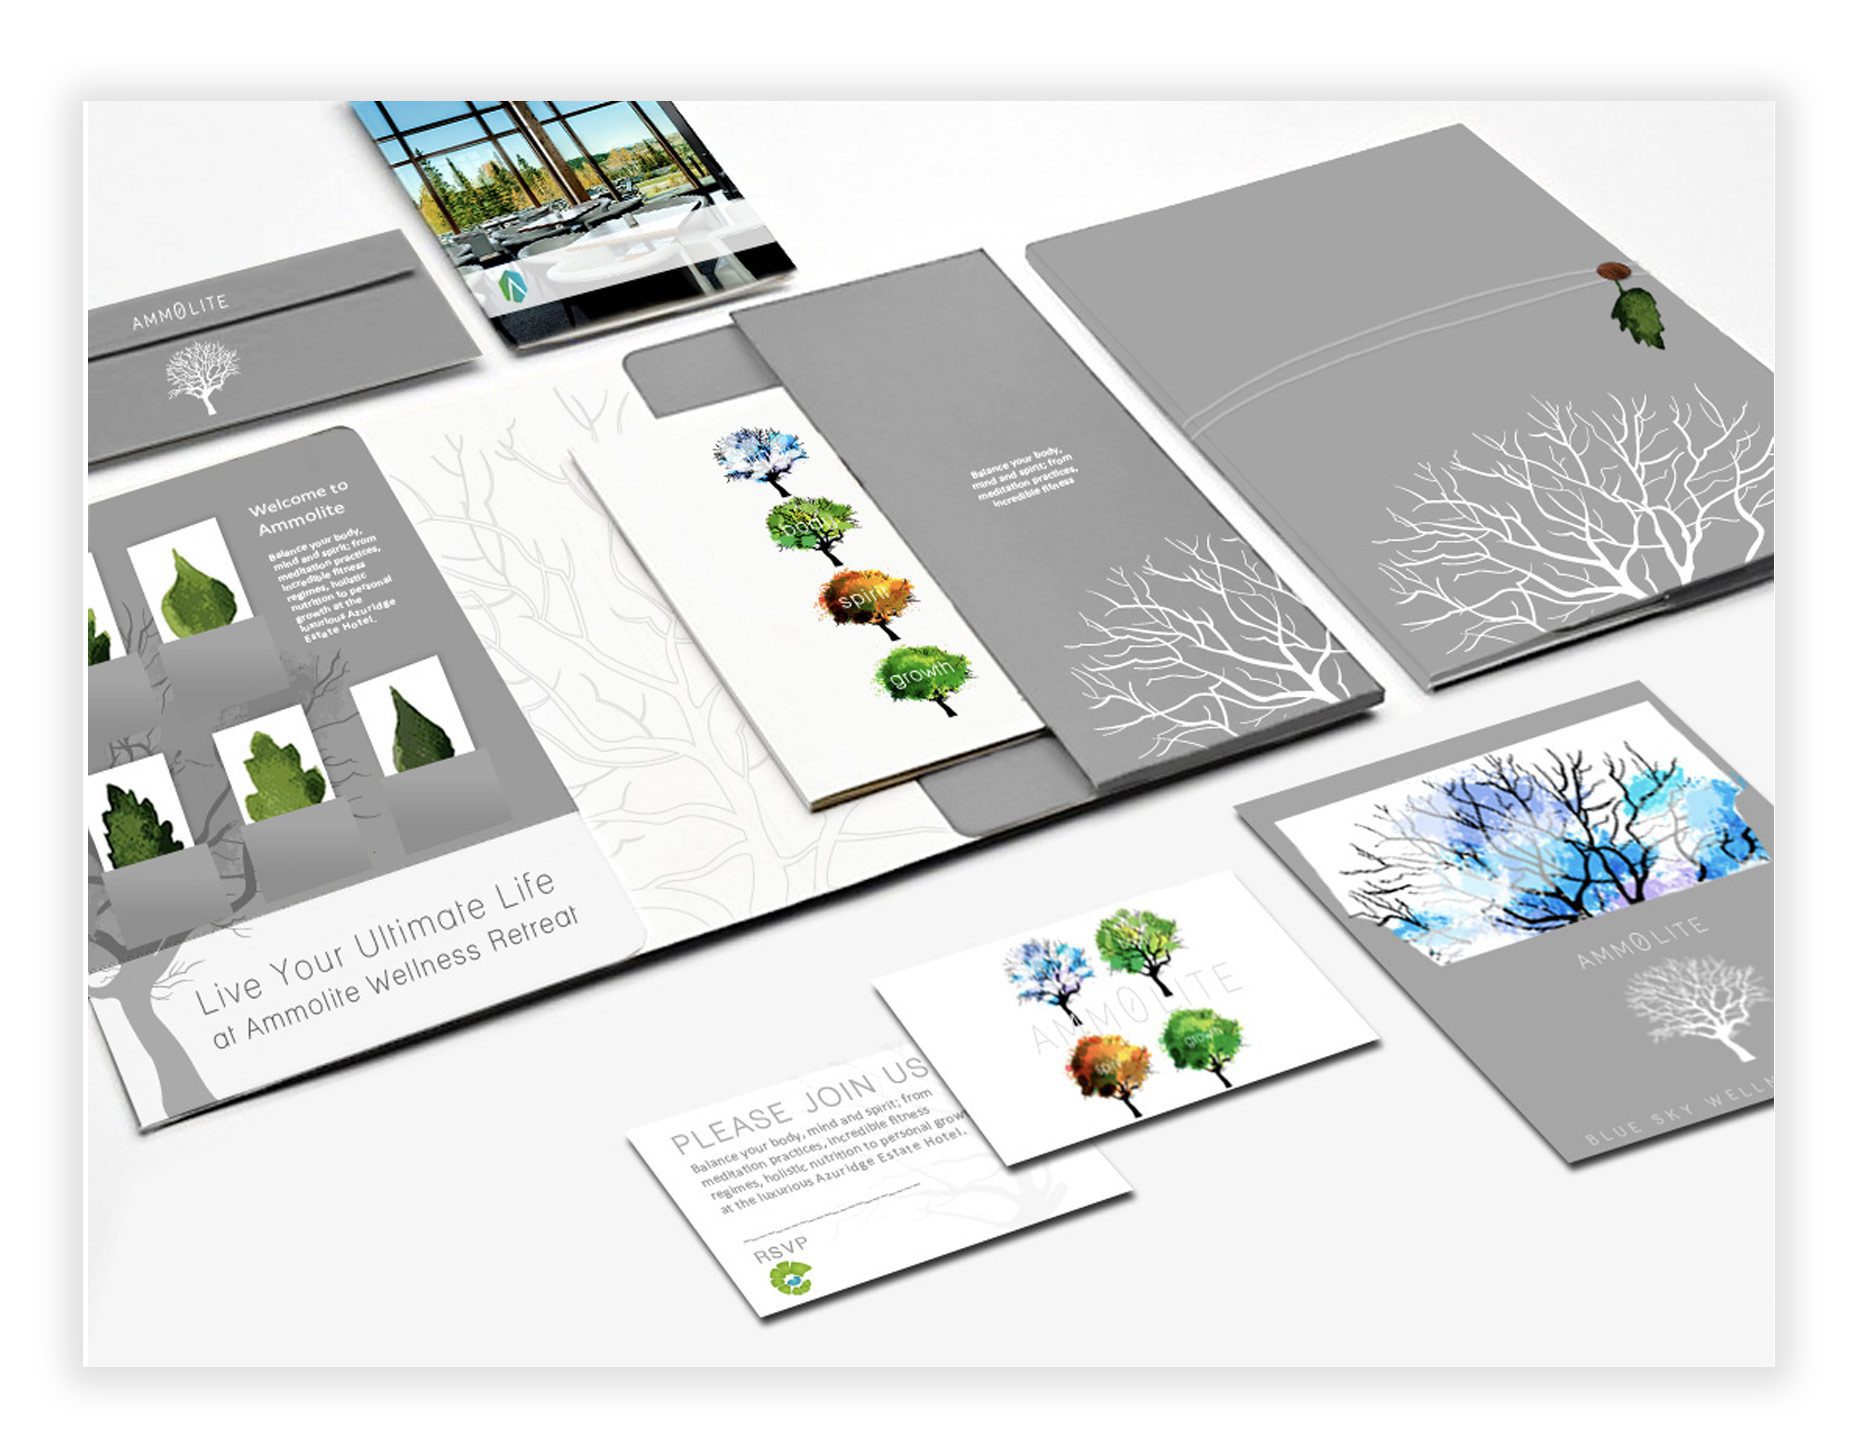 Oliver-Spence-Creative-Client-Ammolite-Graphic-Design2